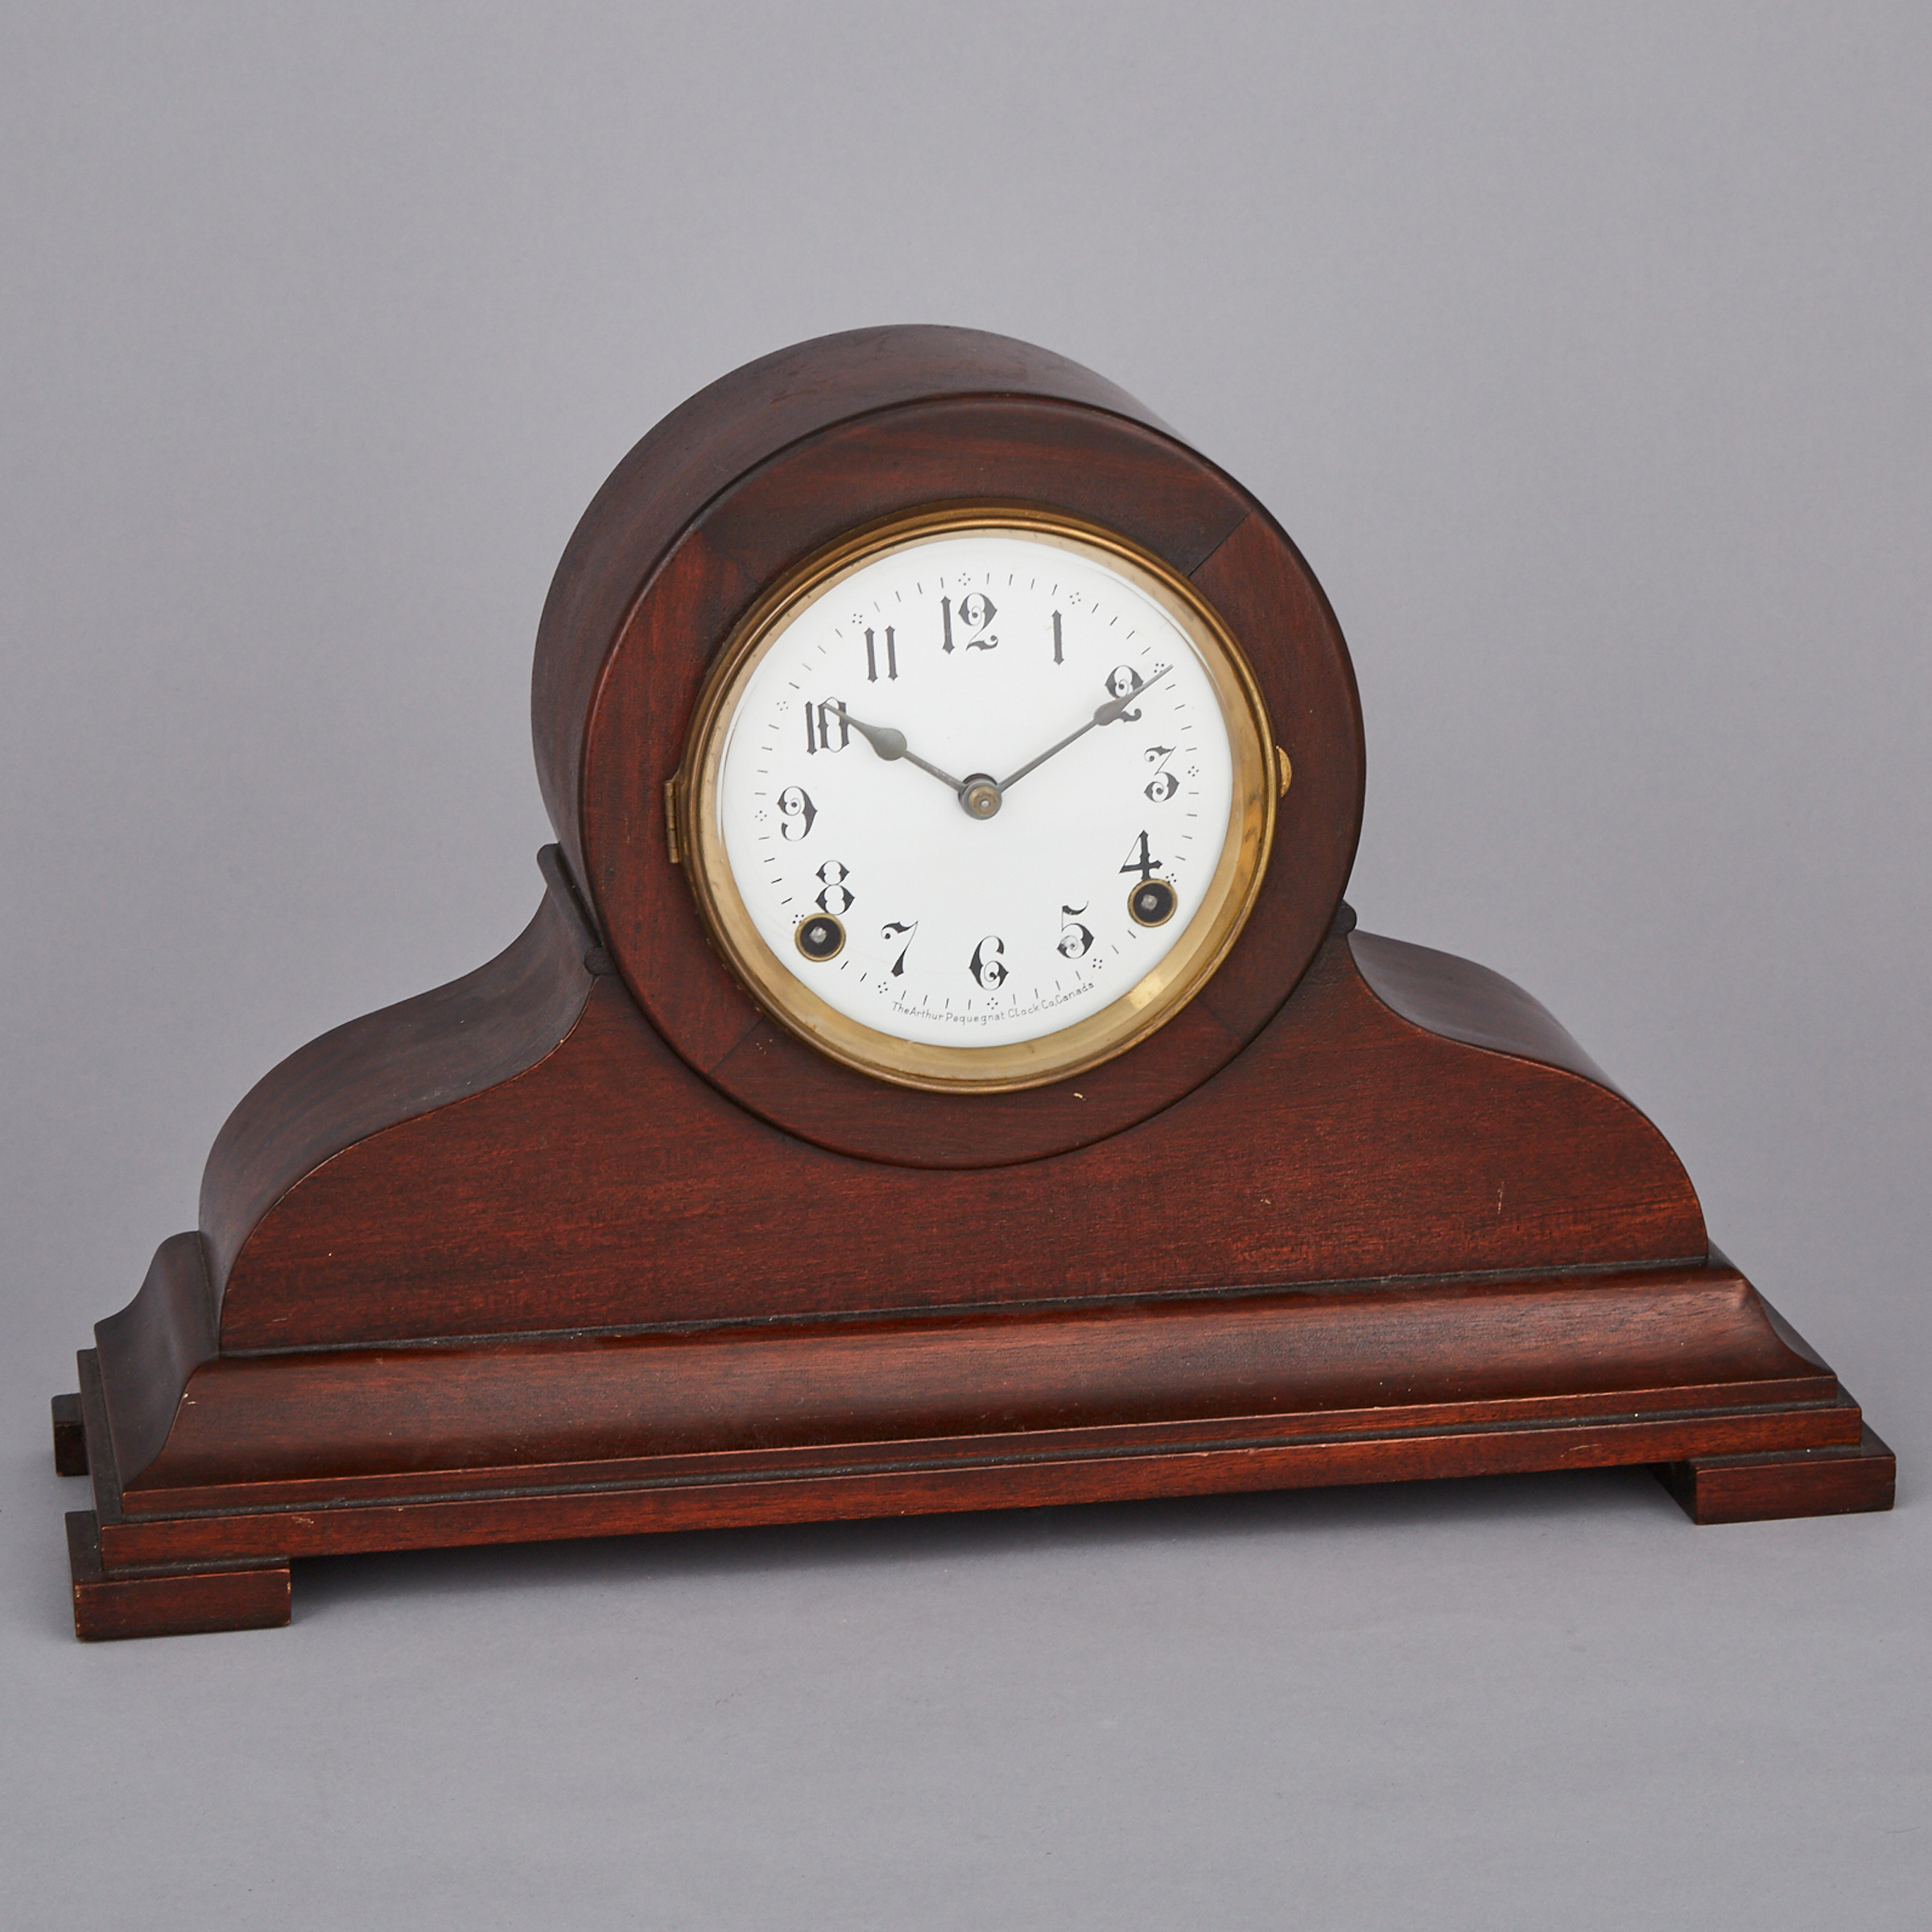 Arthur Pequegnat ‘Sherbrooke’ Model Mahogany Mantle Clock, early 20th century